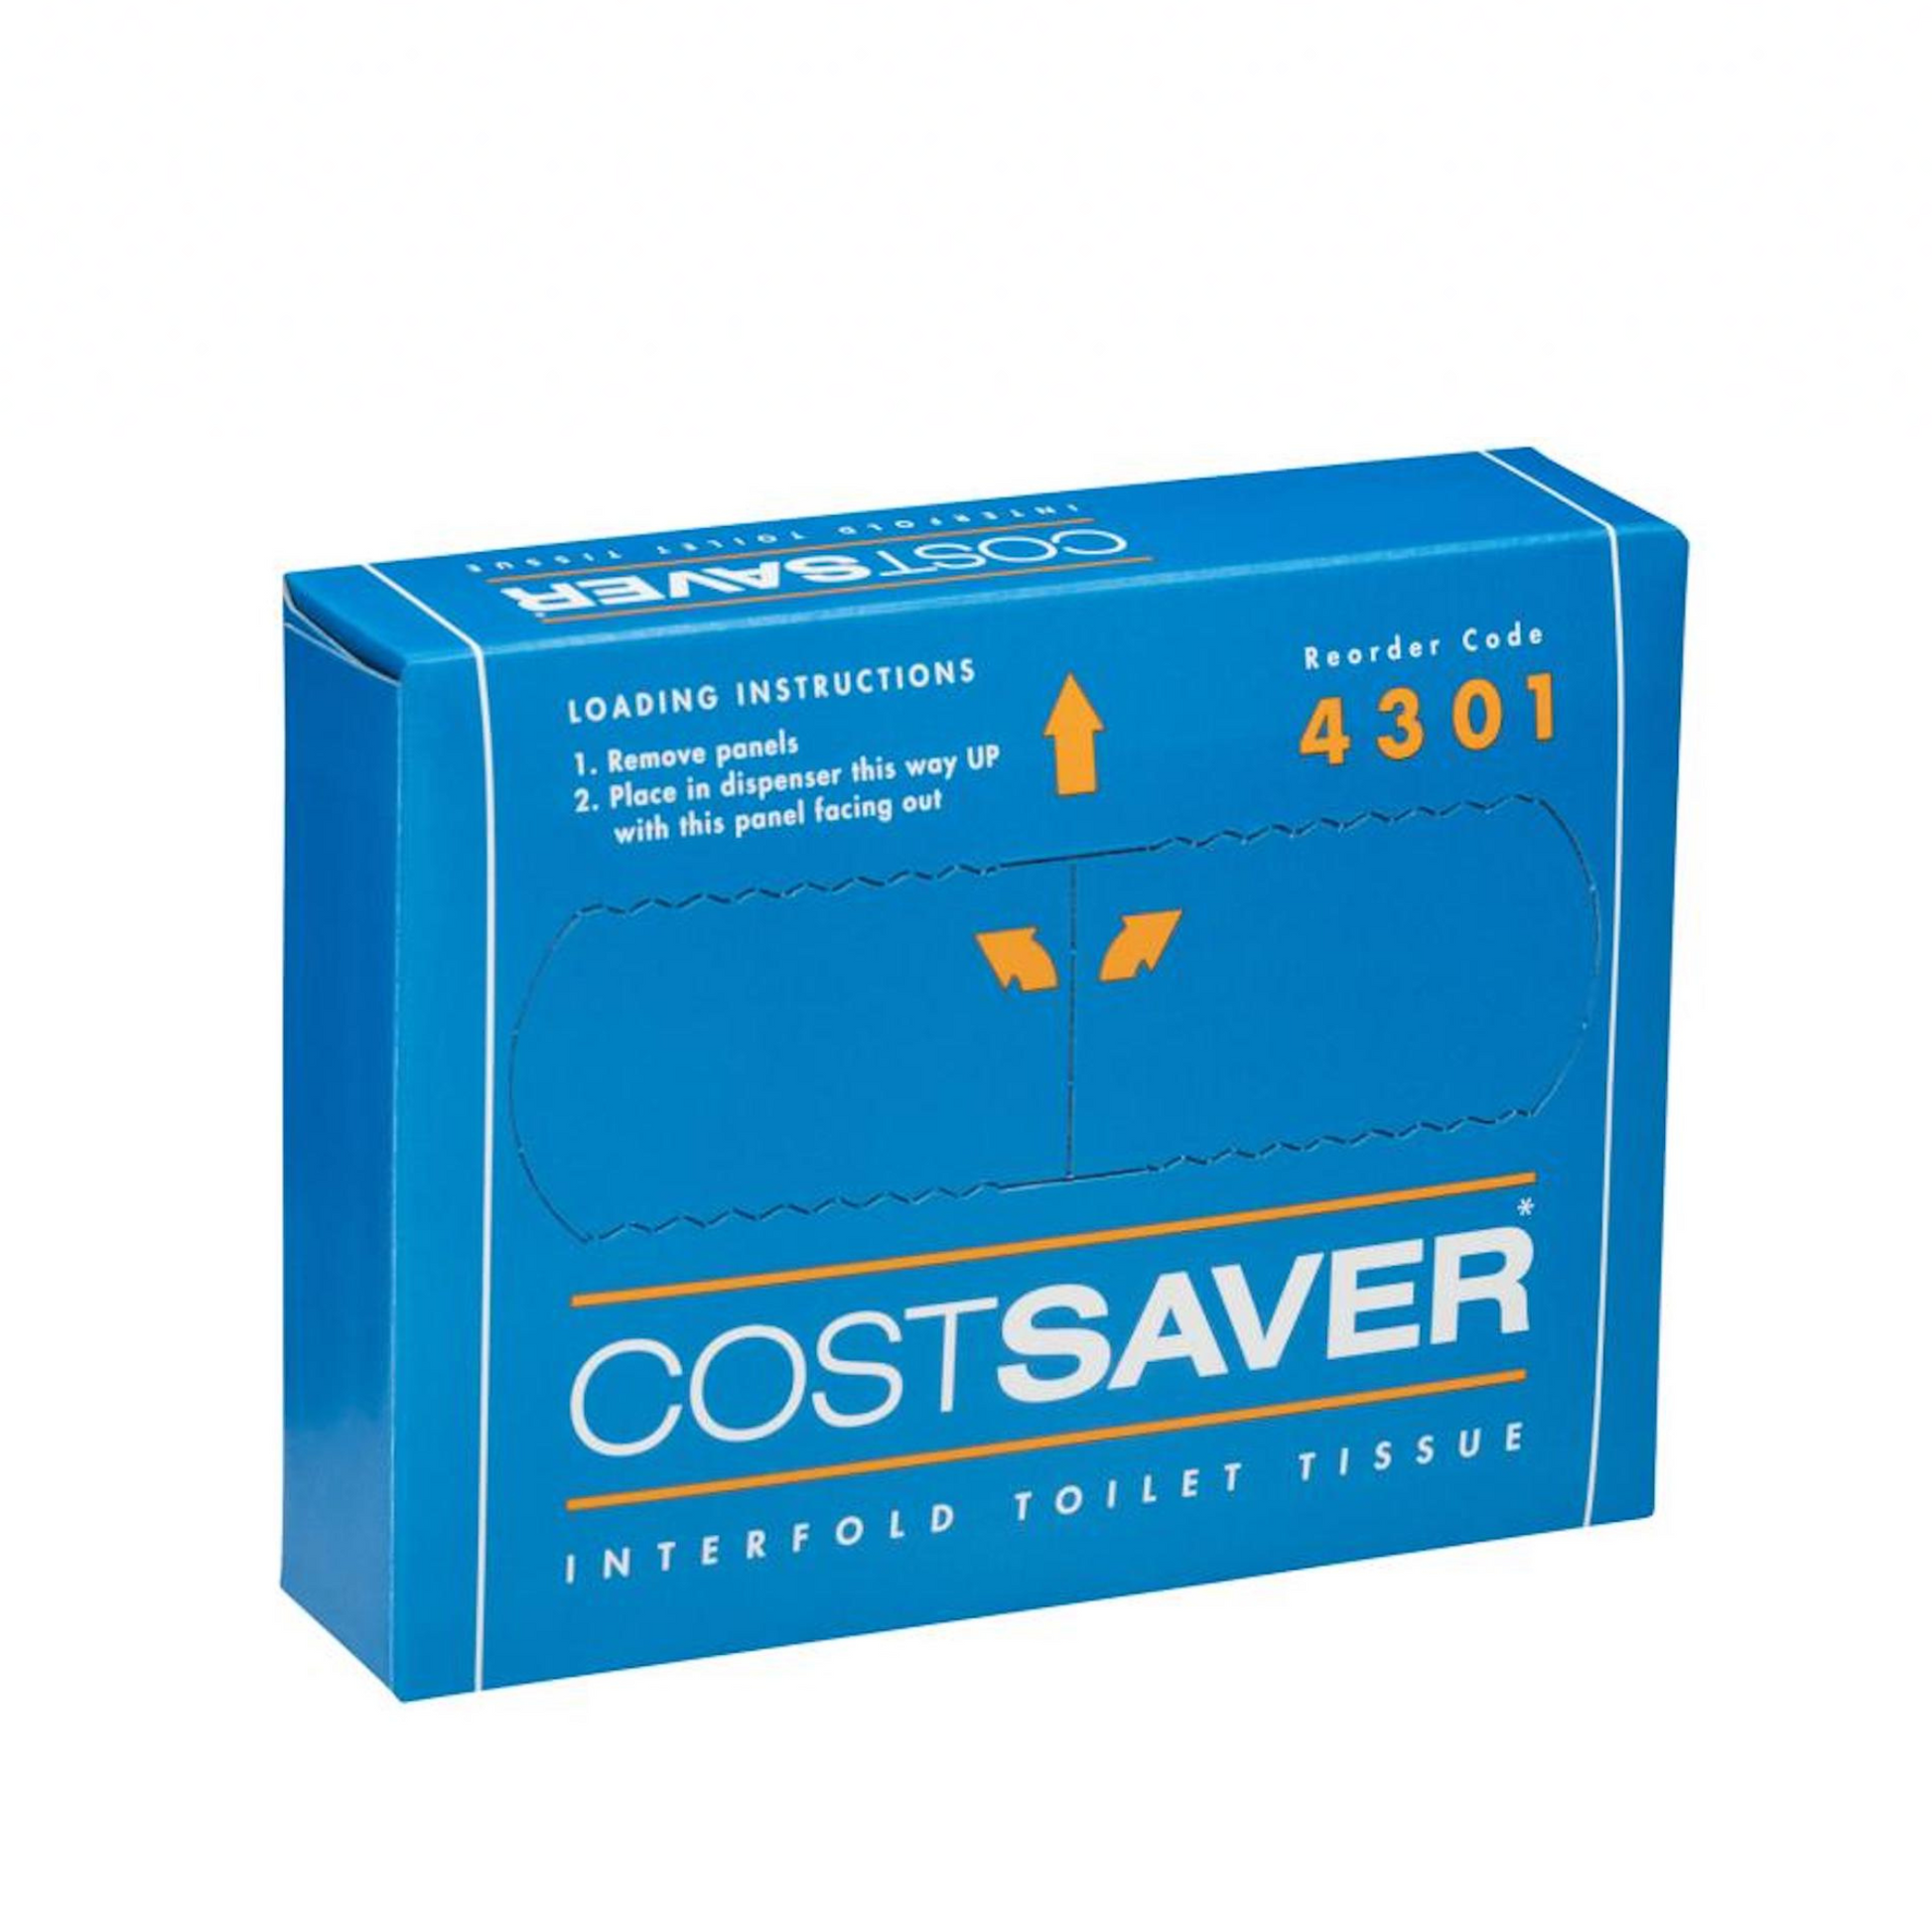 Kimberly Clark 4301 Costsaver Toilet Tissue 1 Ply 200 Sheets - White - Carton (72 x 200pc Pack)